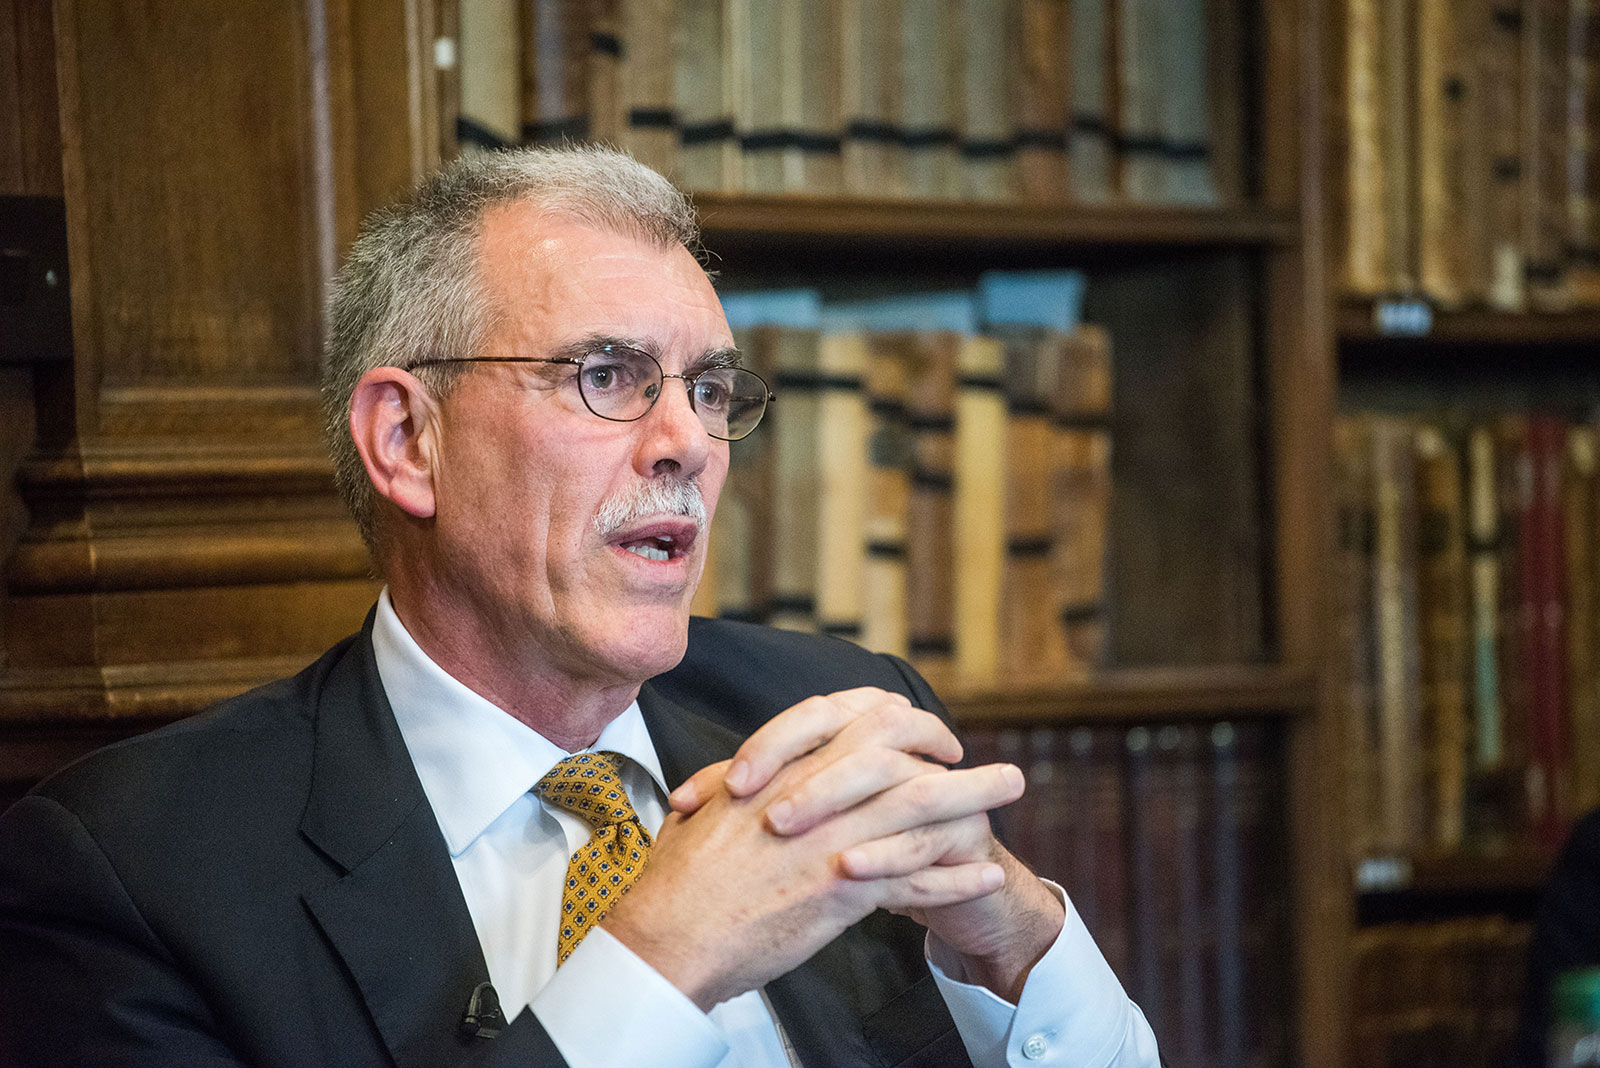 Donald Verrilli speaks at the Oxford Union in 2017. 